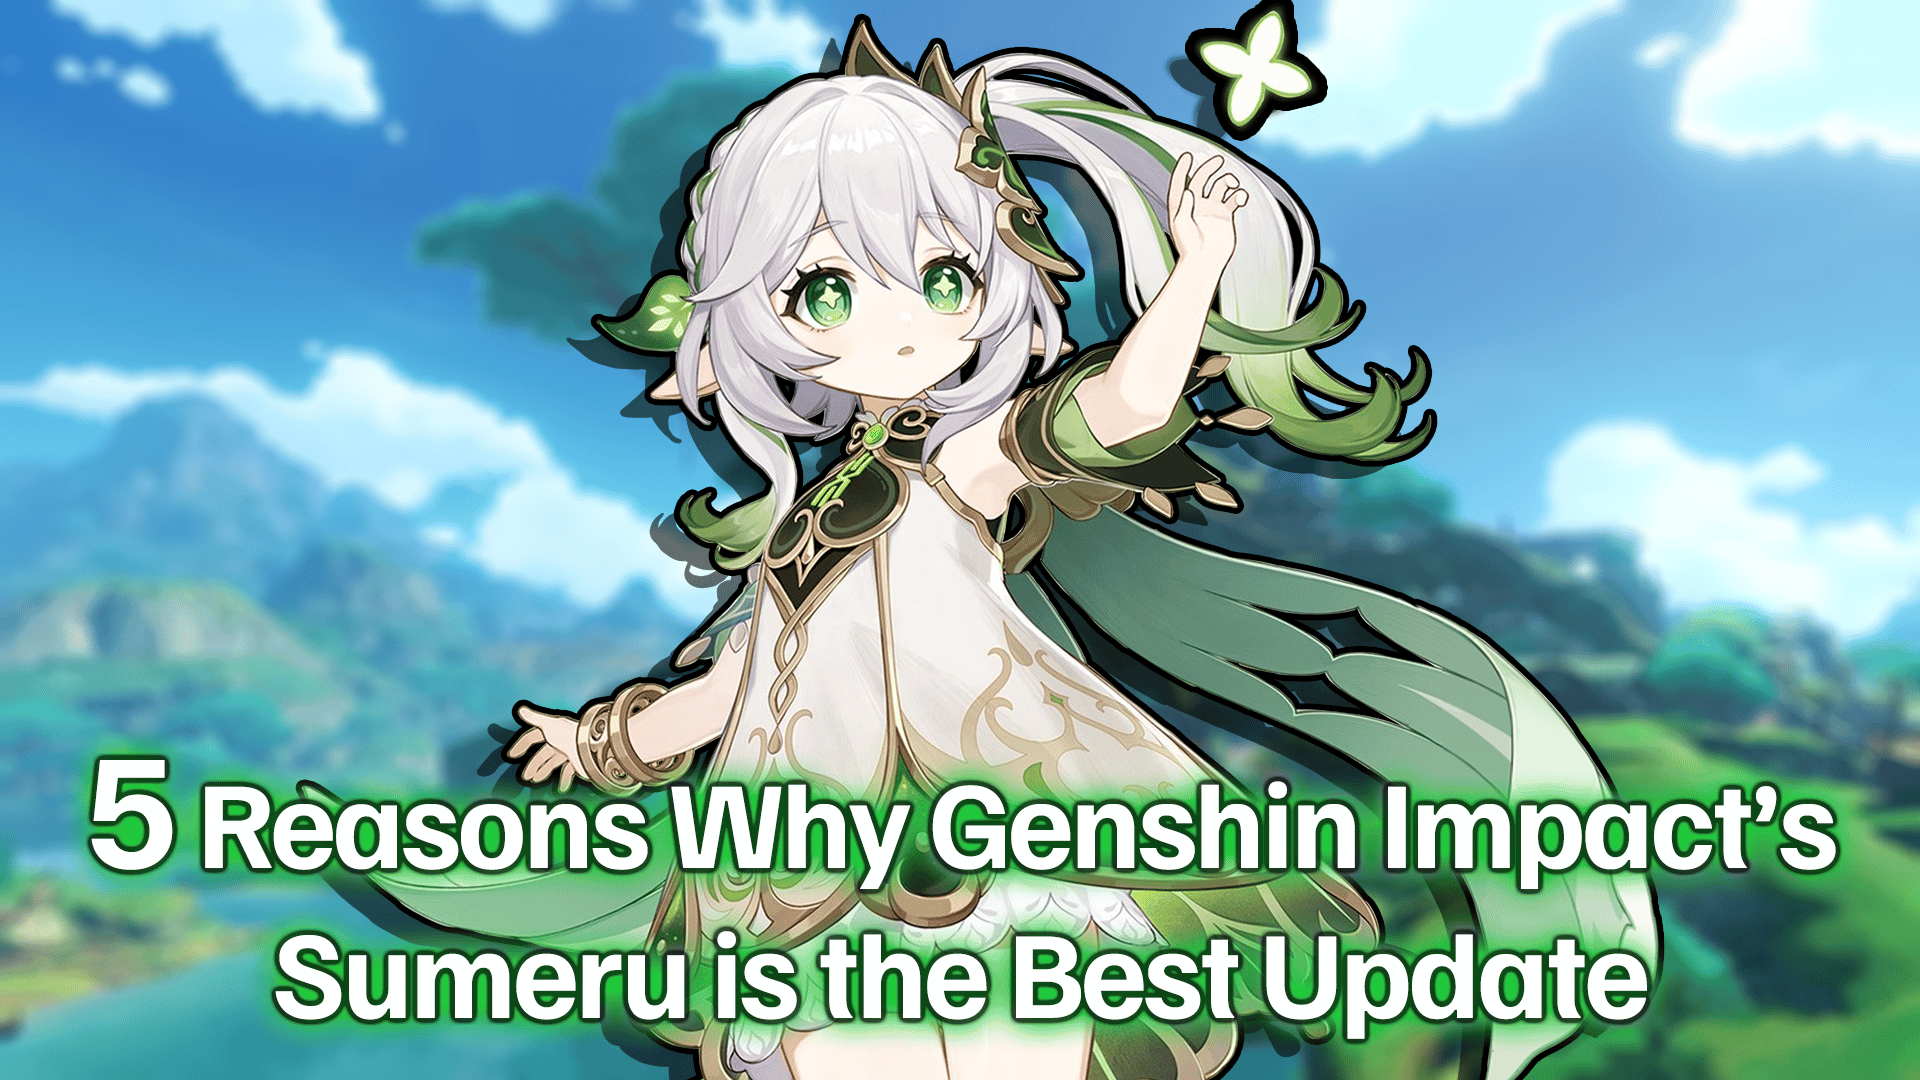 5 Reasons Why Genshin Impact’s Sumeru is the Best Update